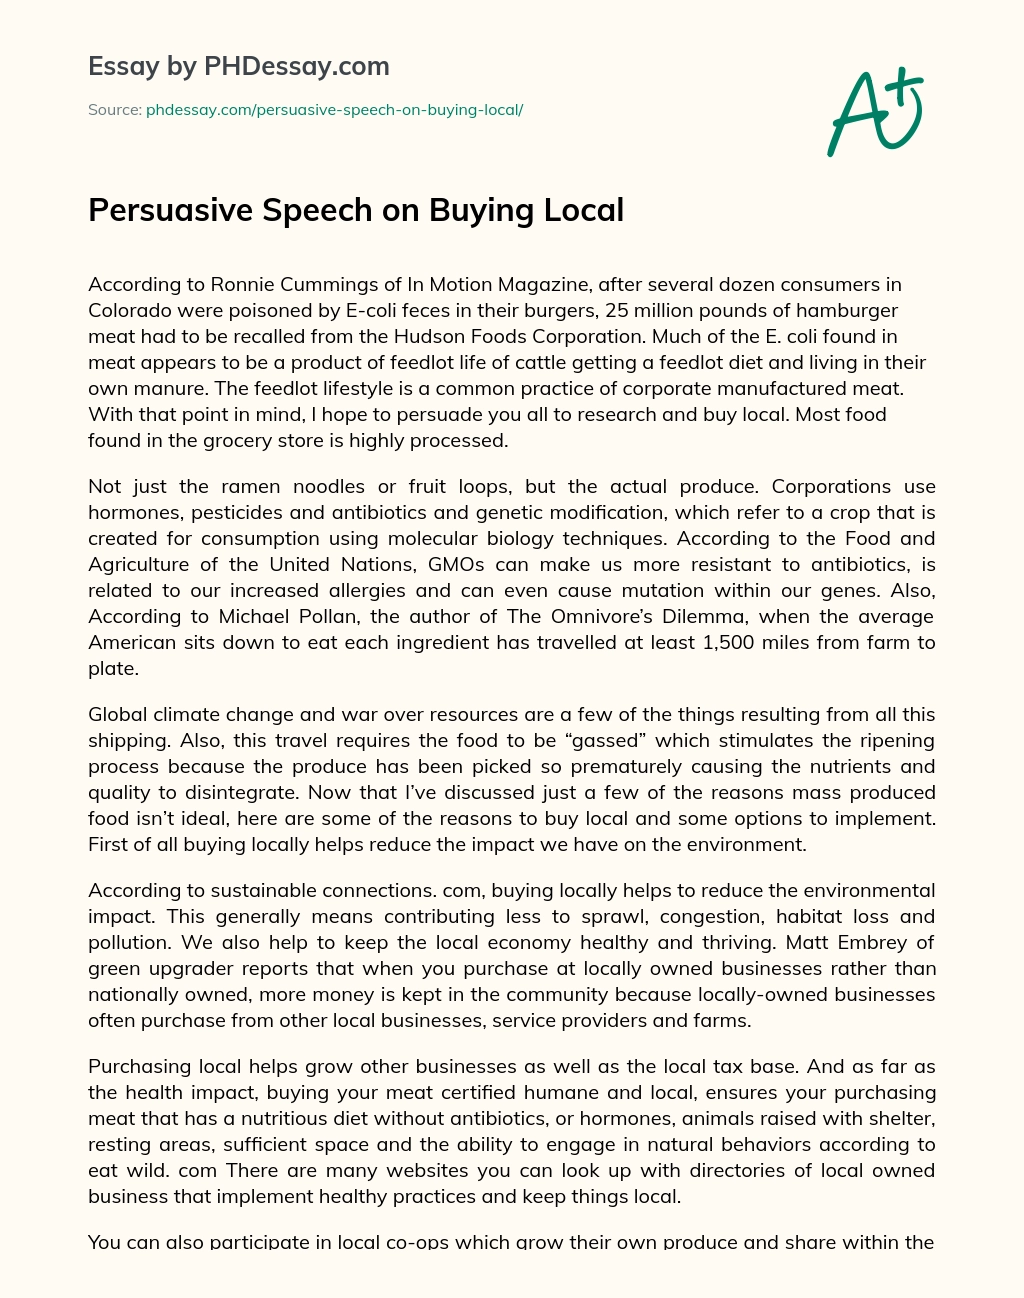 Persuasive Speech on Buying Local